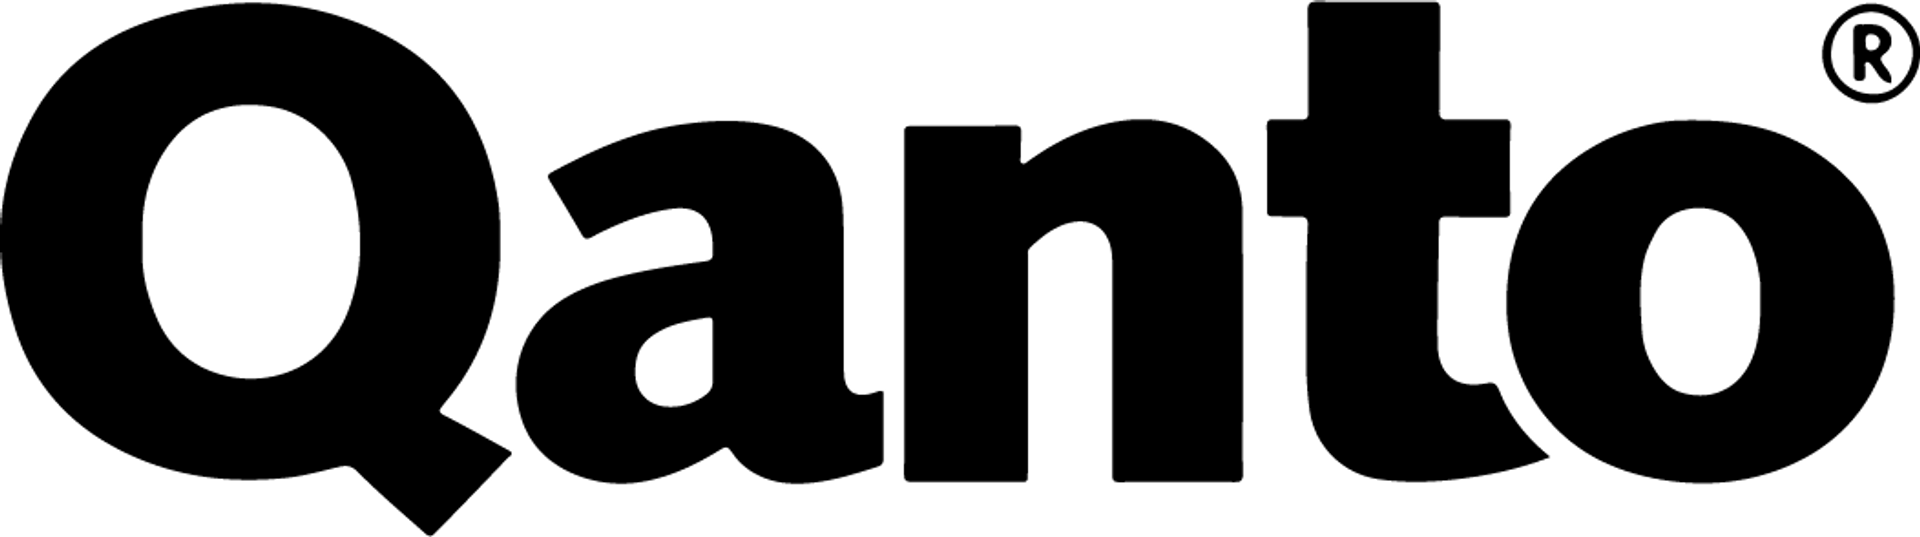 ASTUR & QANTO logo of current flyer